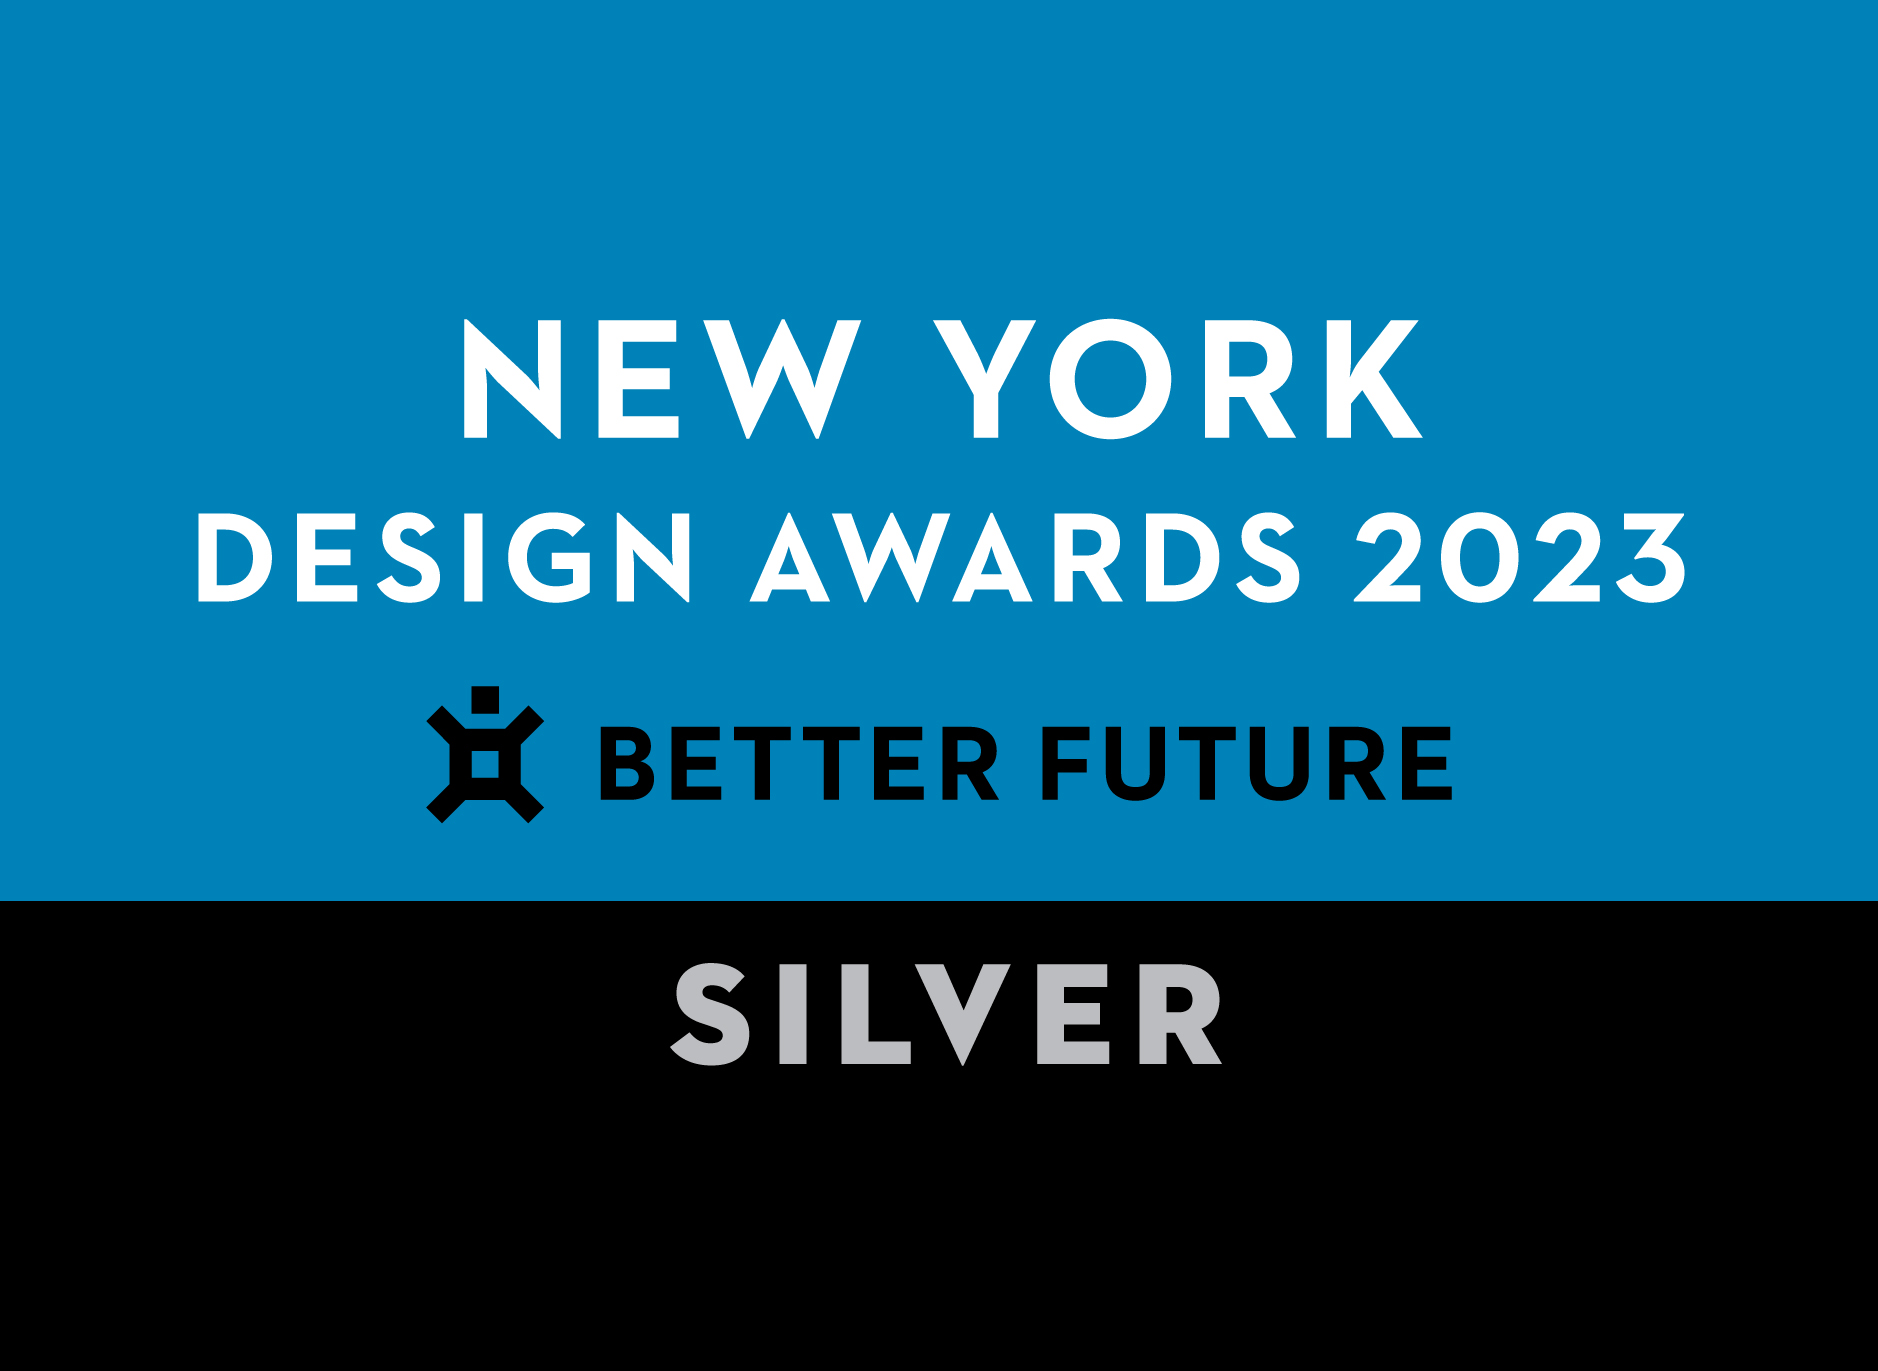 NEW YORK DESIGN AWARDS 2023 – SILVER